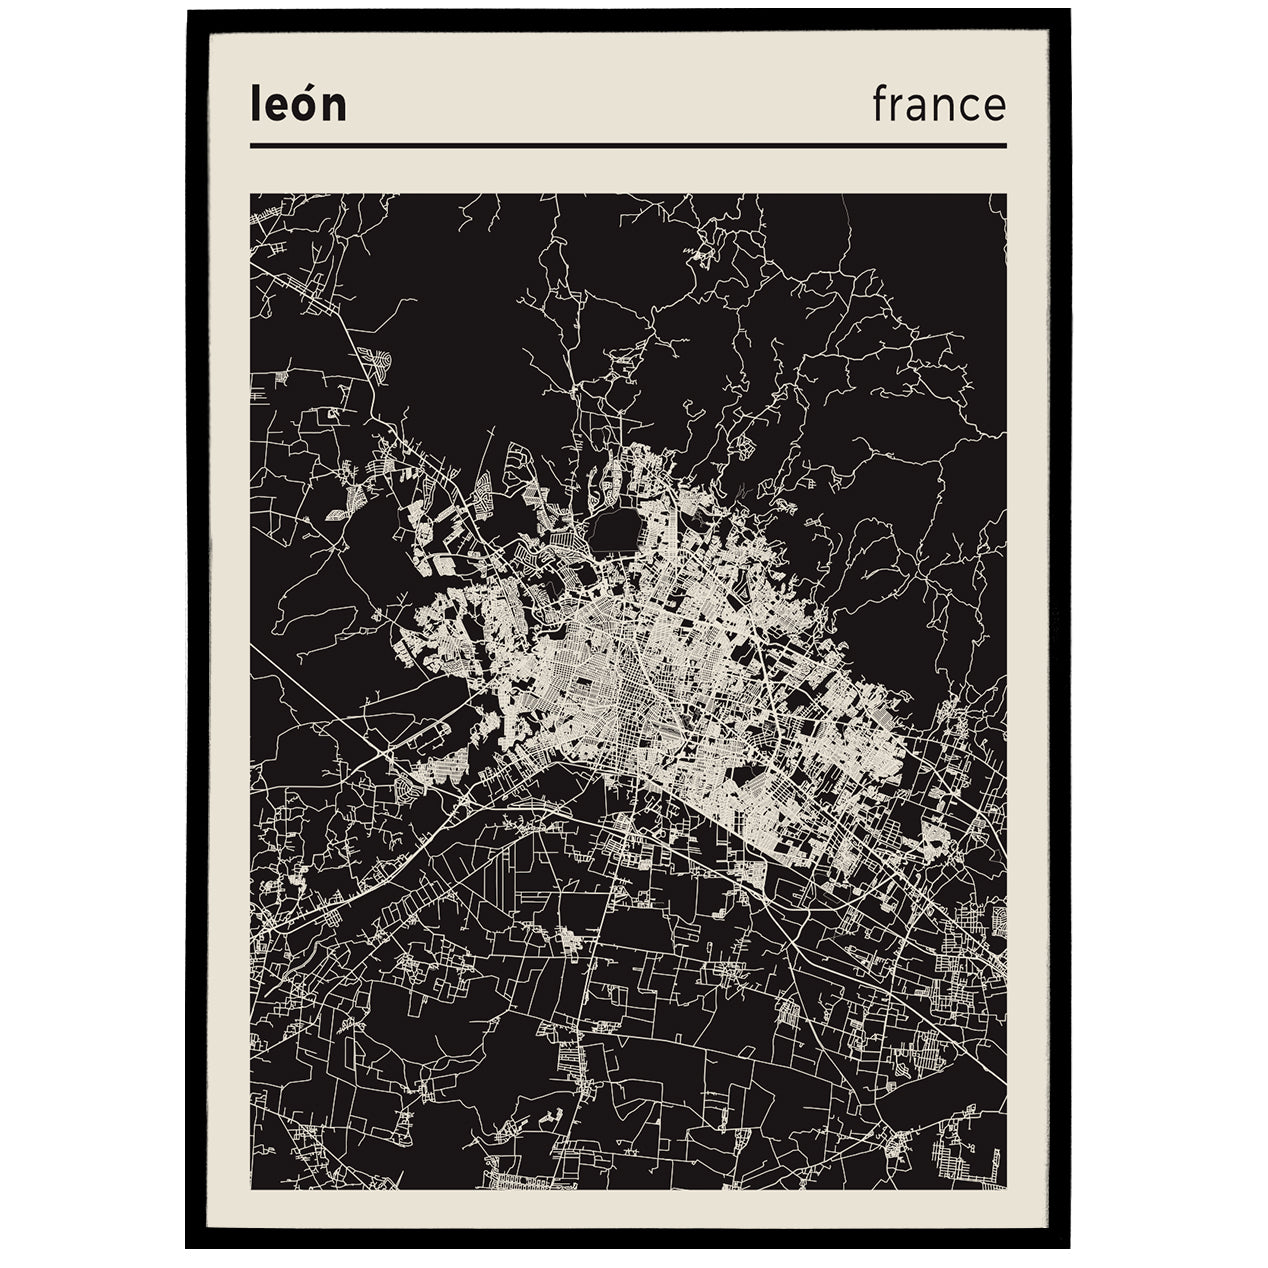 Léon, France - City Map Poster